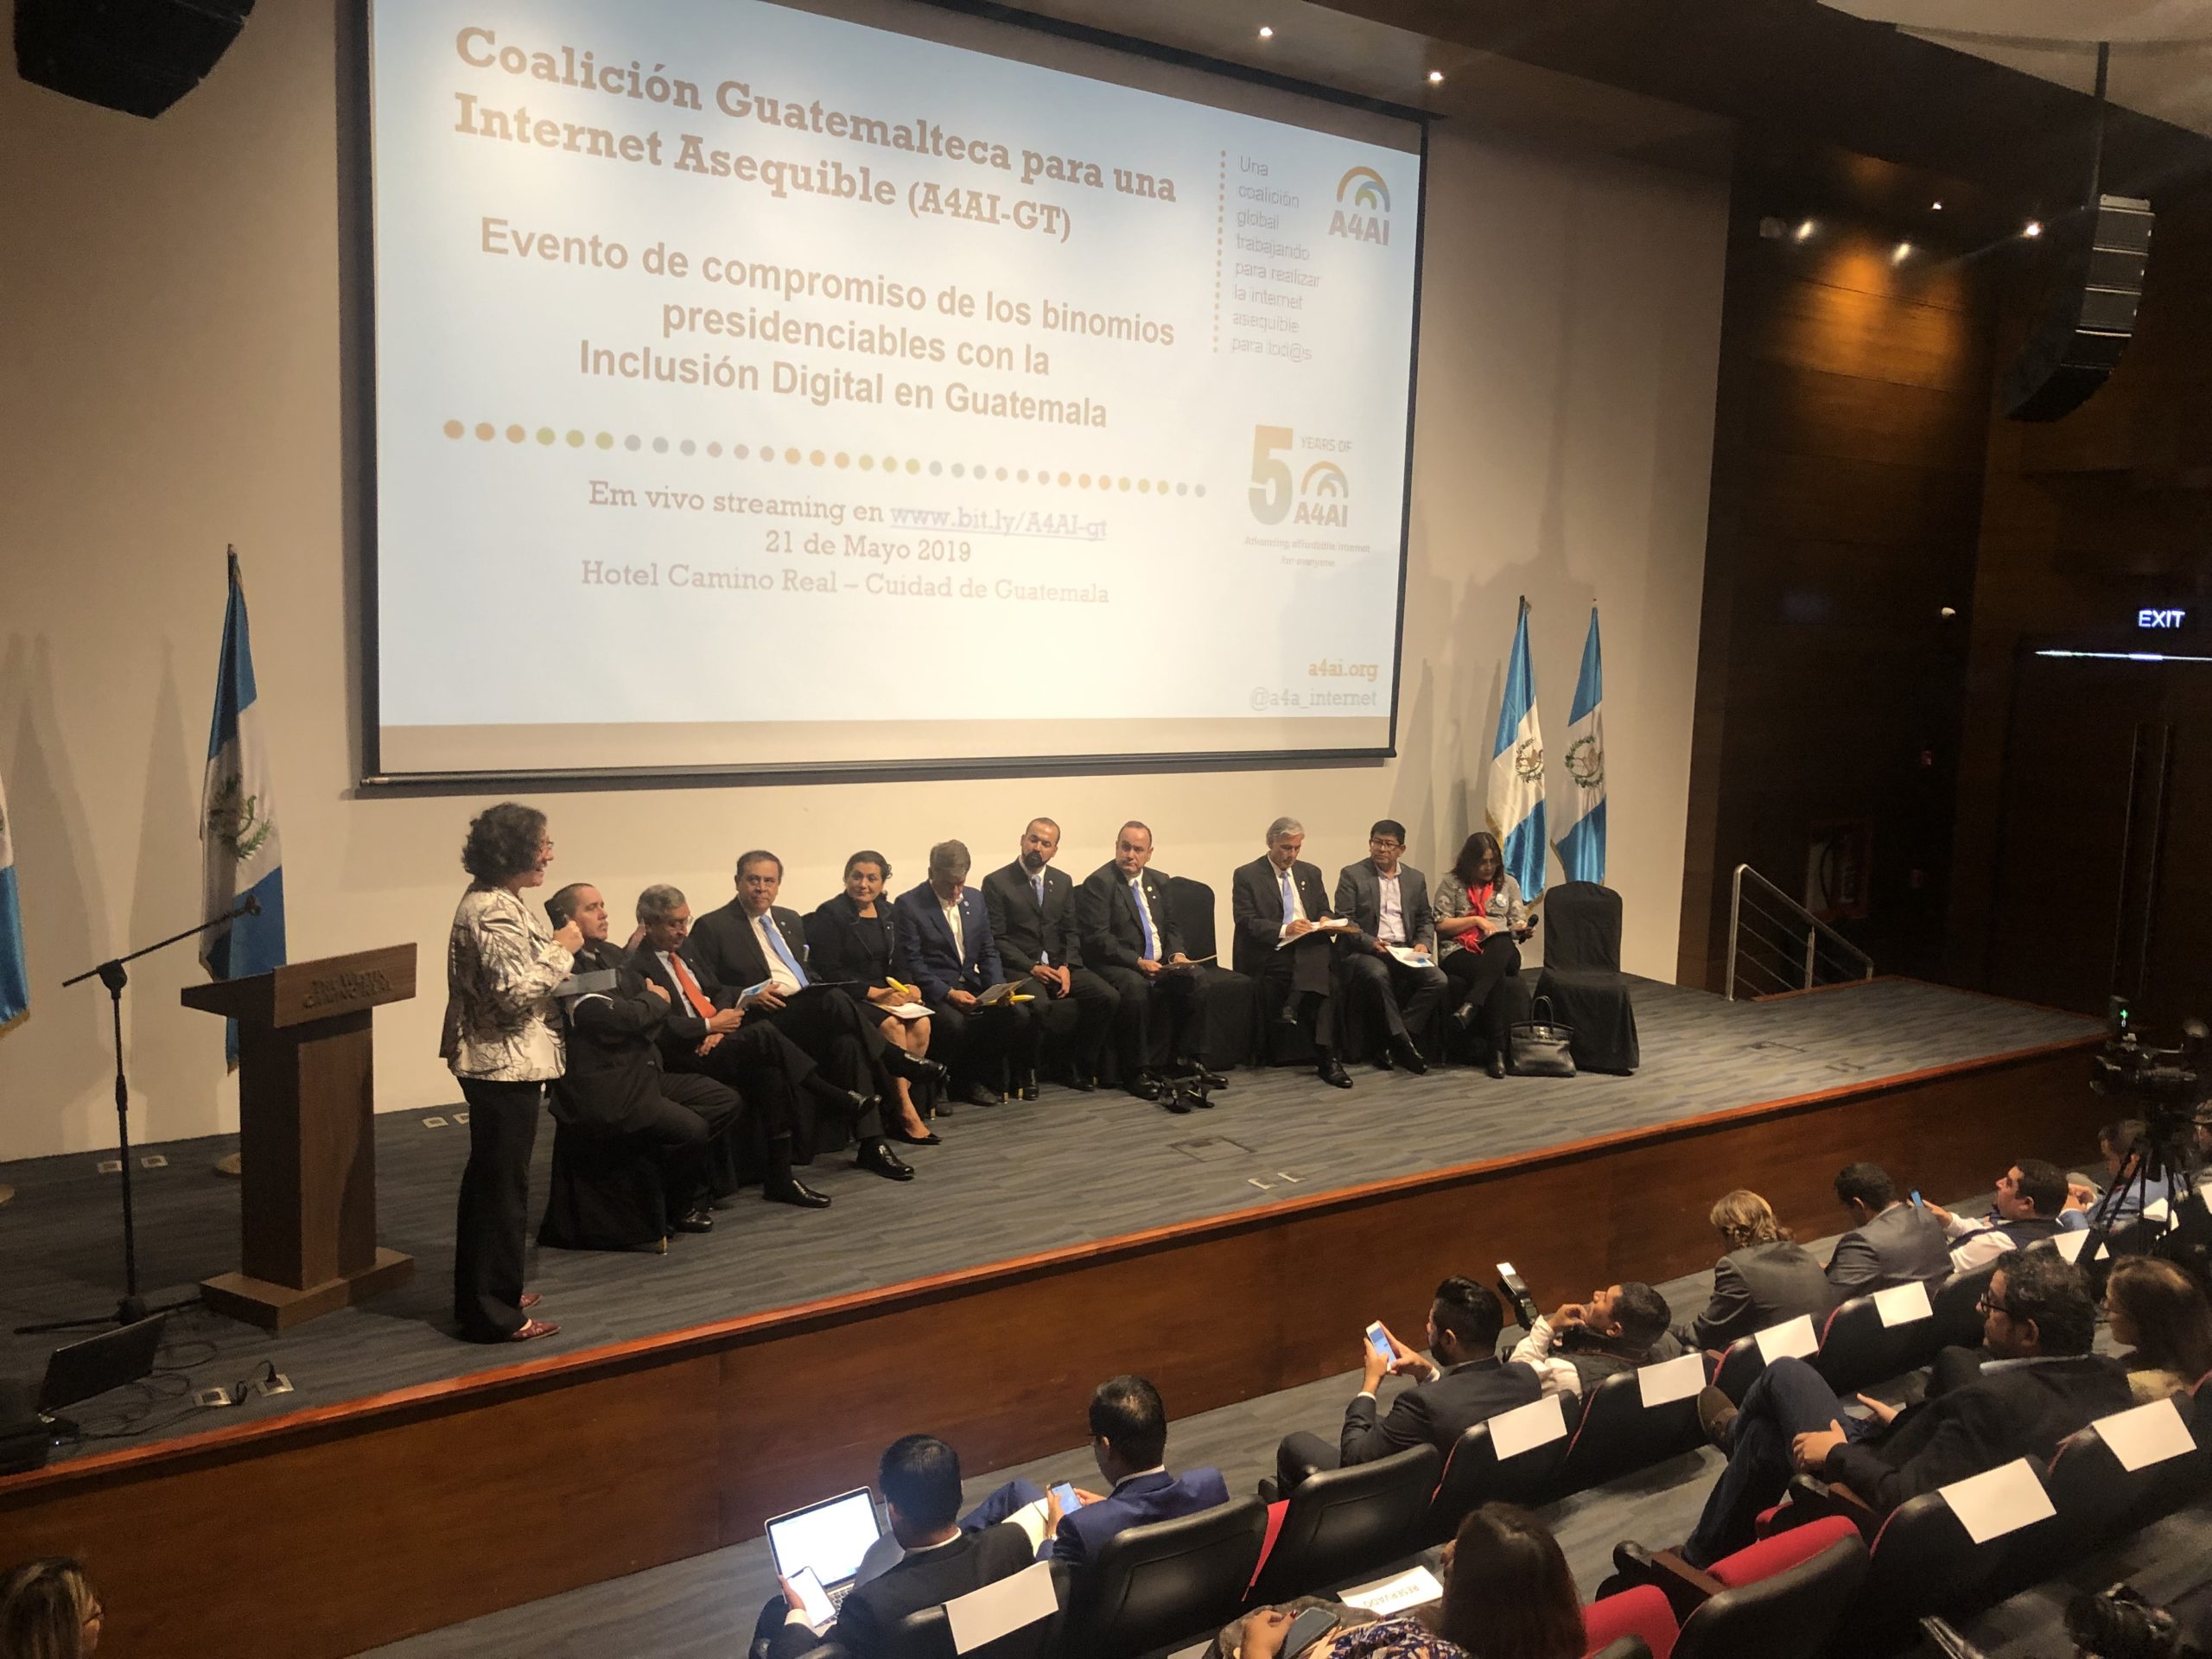 Photo of digital inclusion event in Guatemala